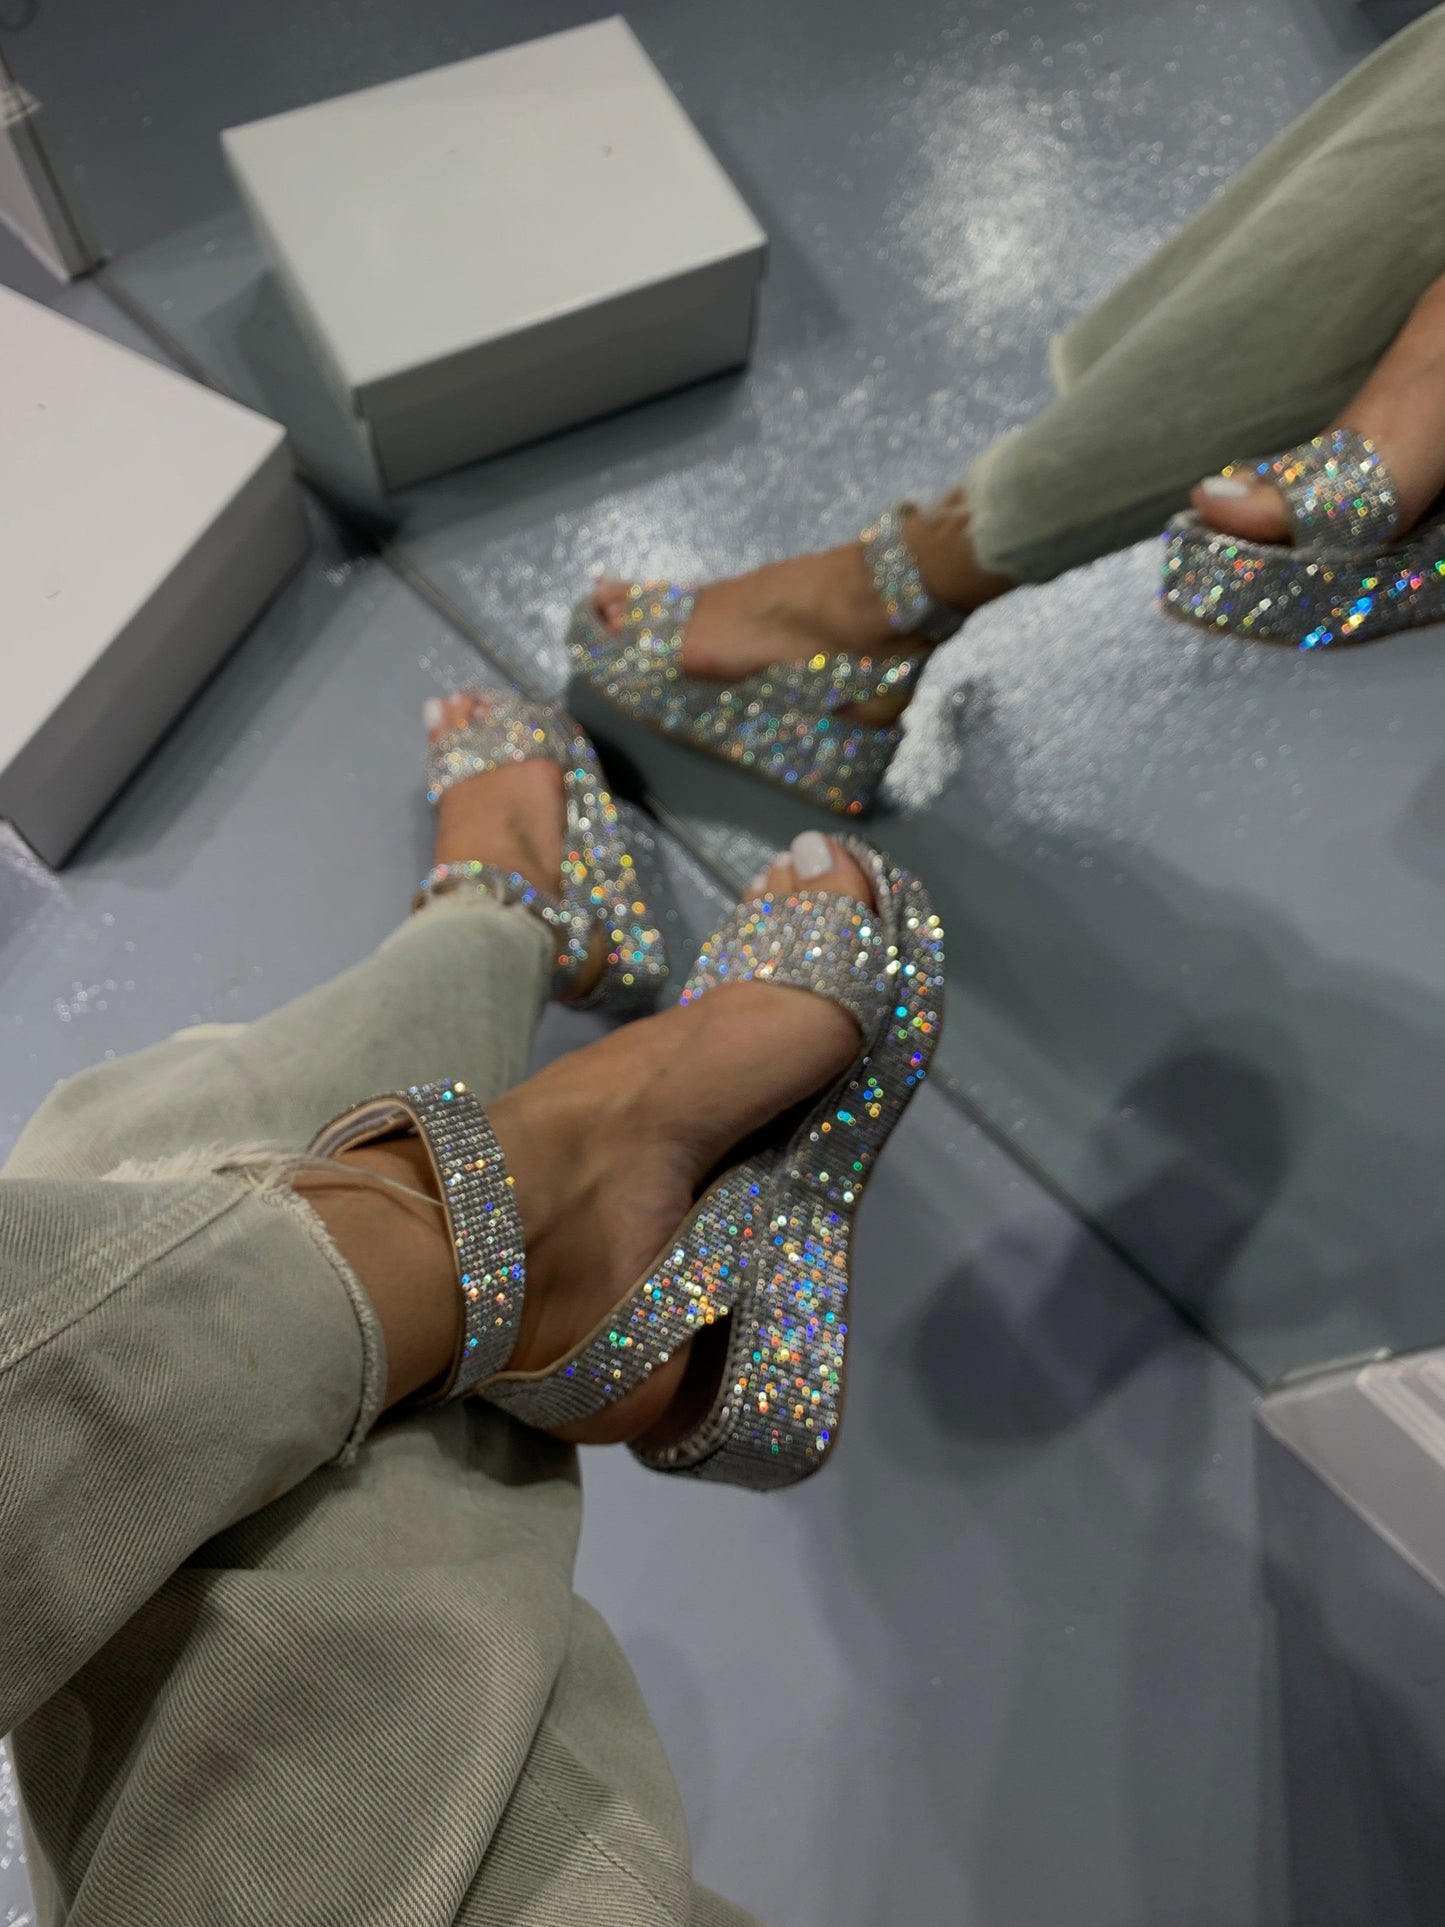 sparkly sandals